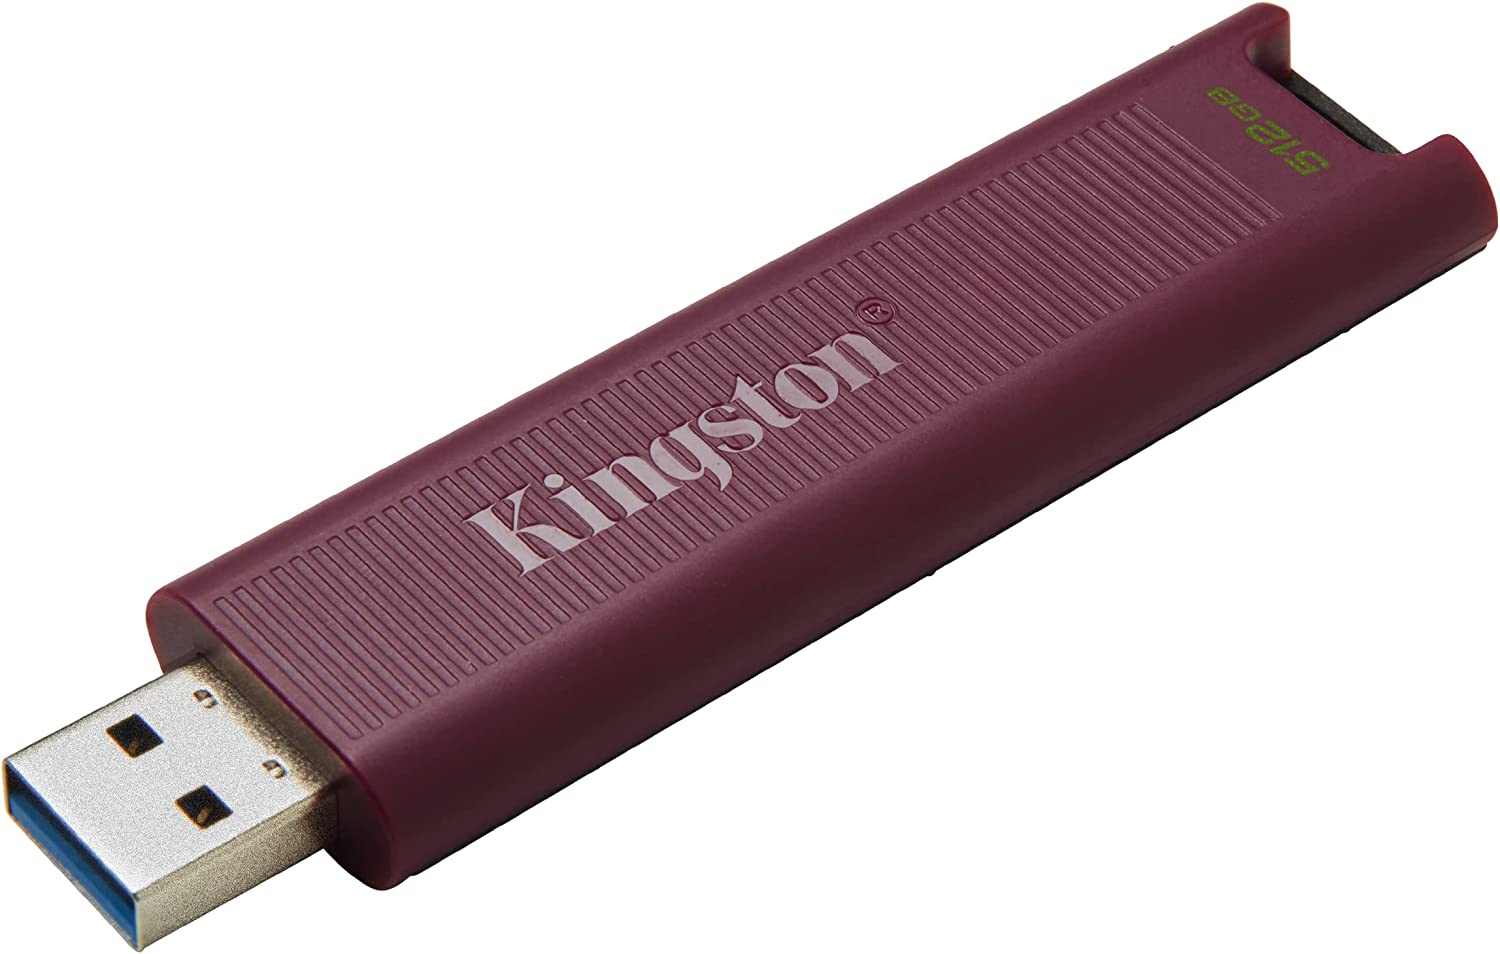 USB Stick Stik Kingston DataTraveler 512GB